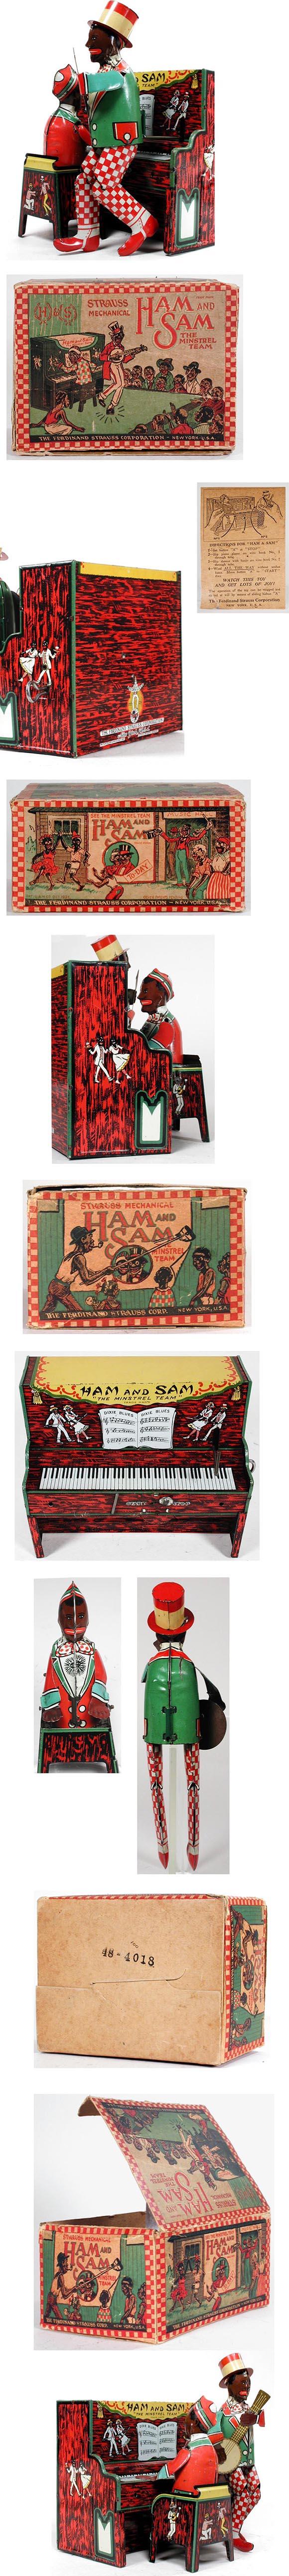 1921 Strauss, Ham and Sam in Original Box